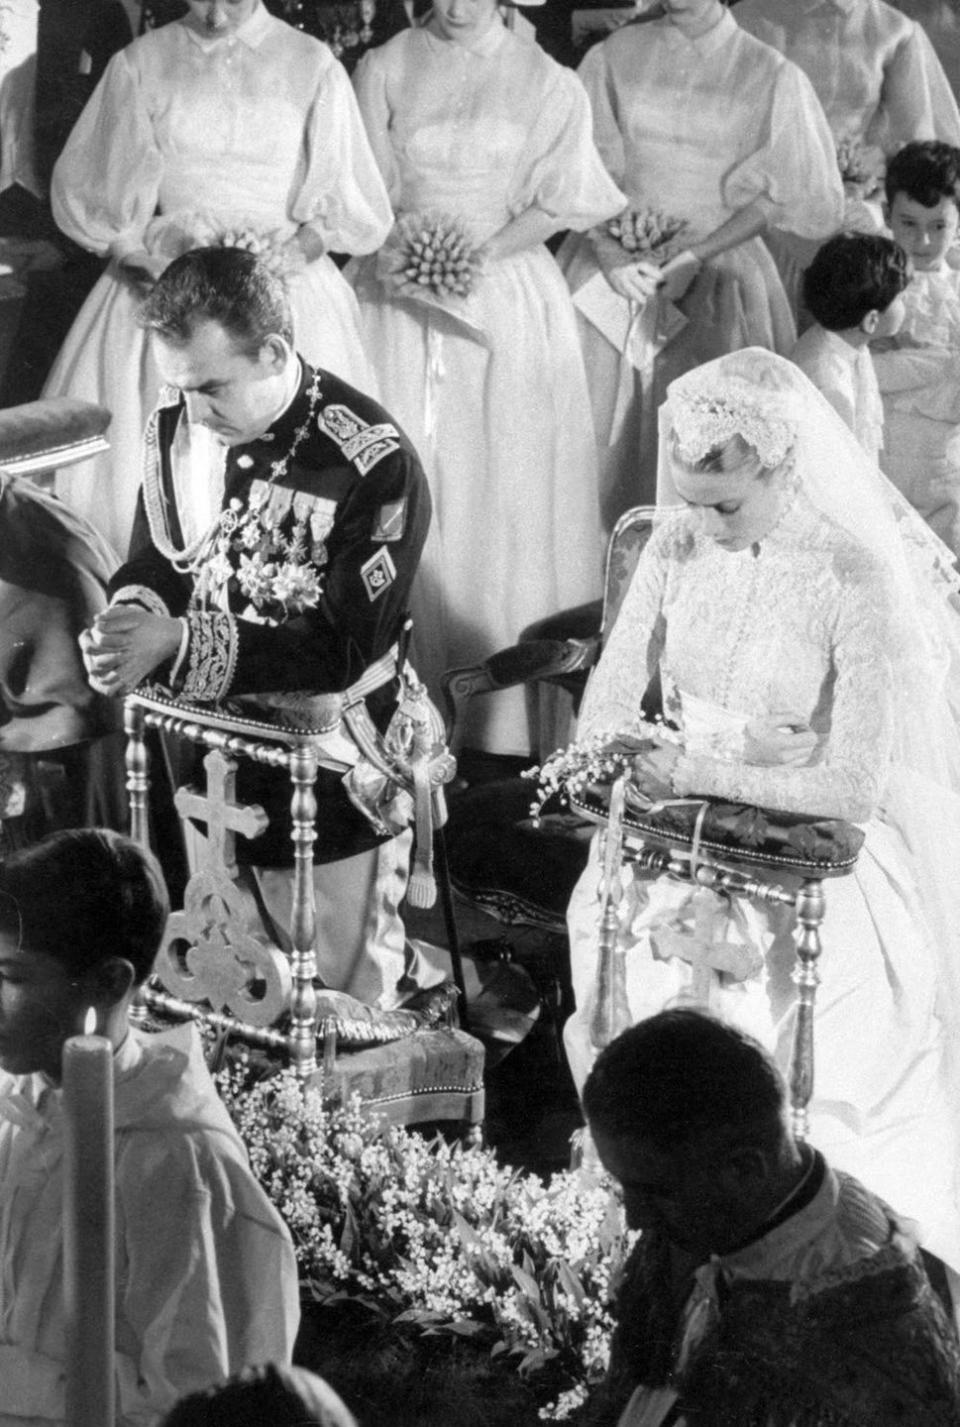 1956: A Royal Wedding